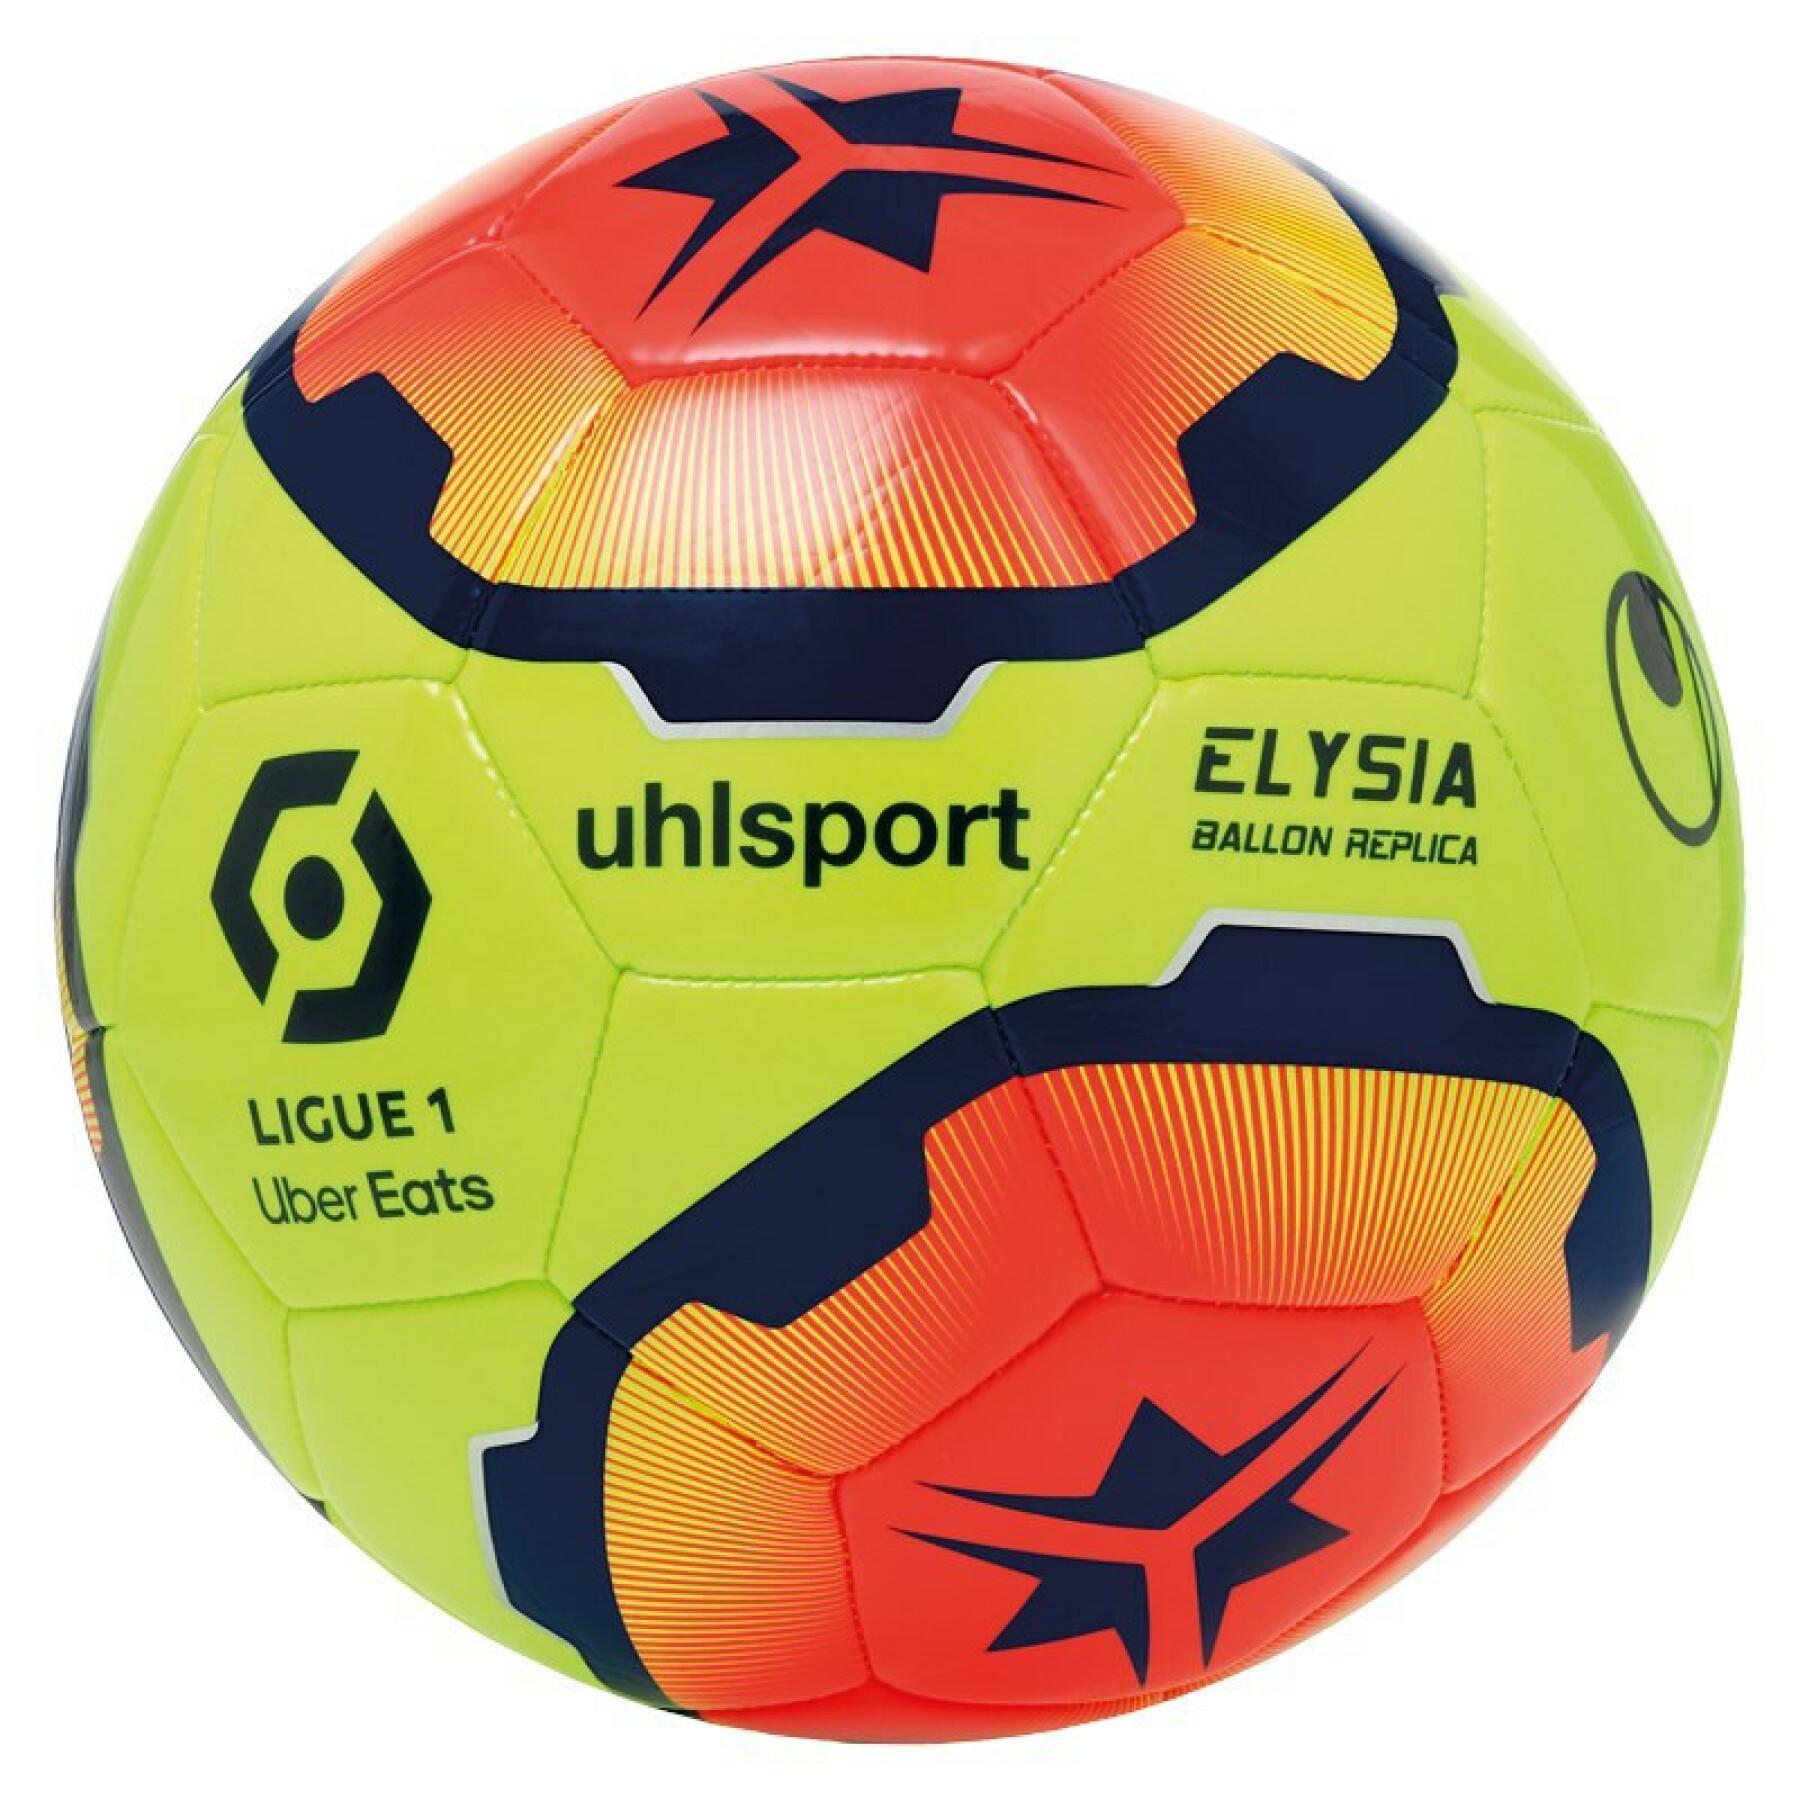 Ballon Uhlsport Elysia replica